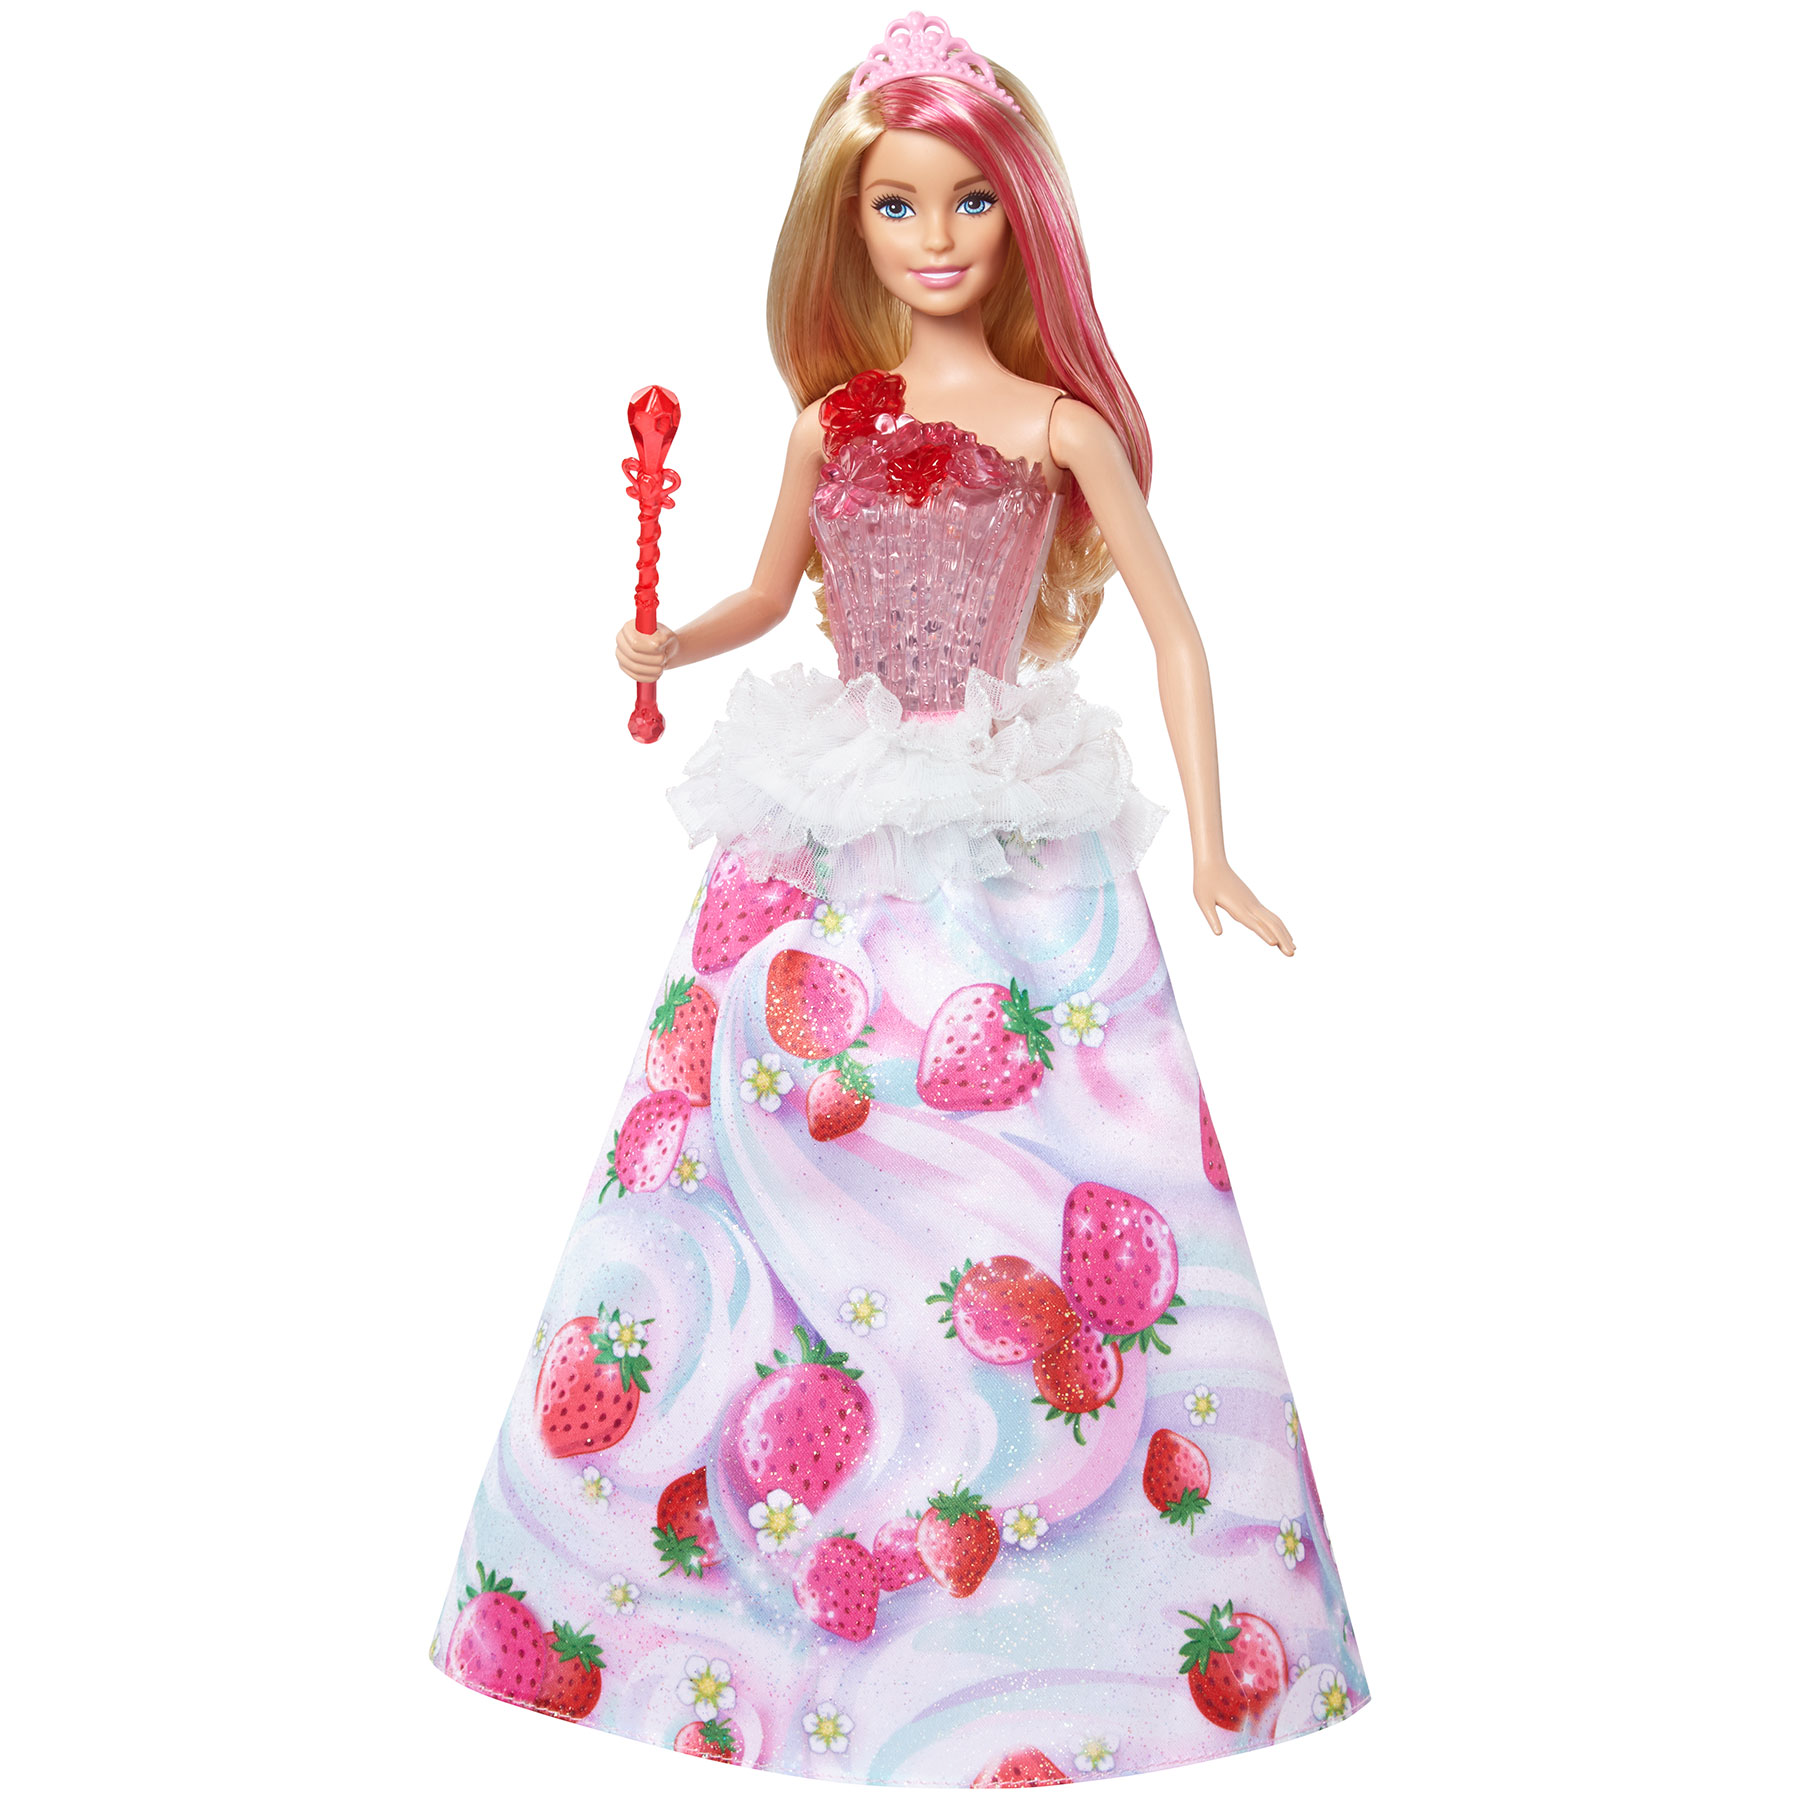 Куклы в интернете купить недорого. Кукла Барби принцесса Дримтопия. Кукла Барби Дримтопия конфетная принцесса. Большая кукла Барби Дримтопия. Игрушка Barbie конфетная принцесса.